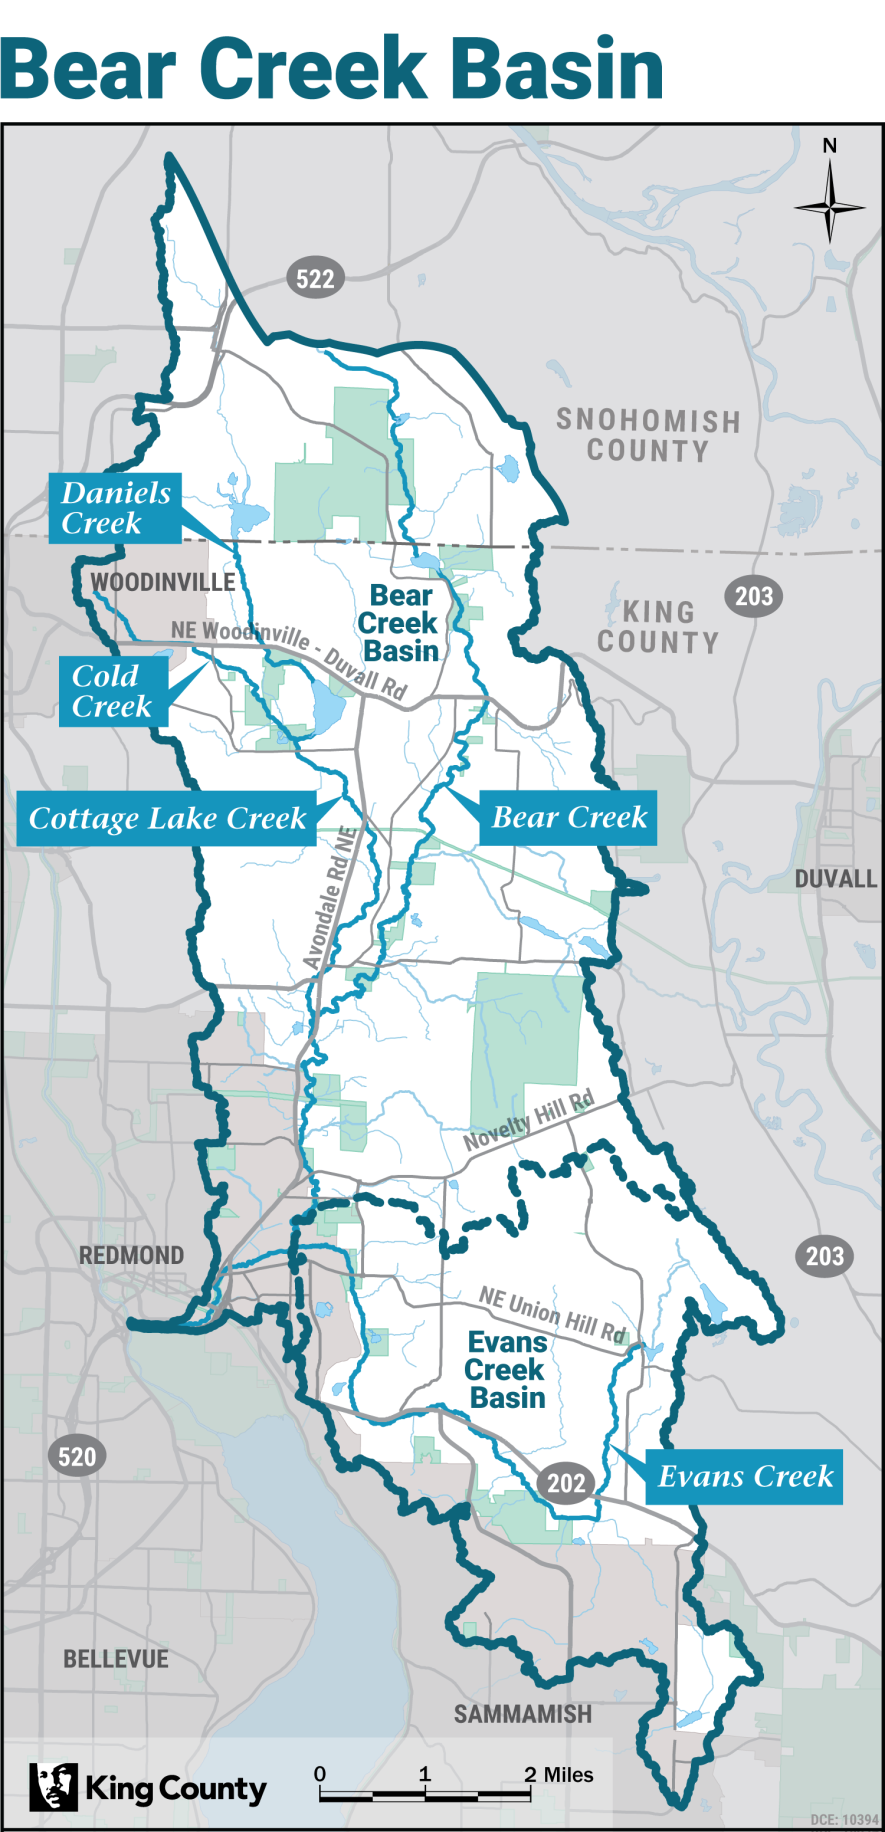 A map displaying the Bear Creek Basin.